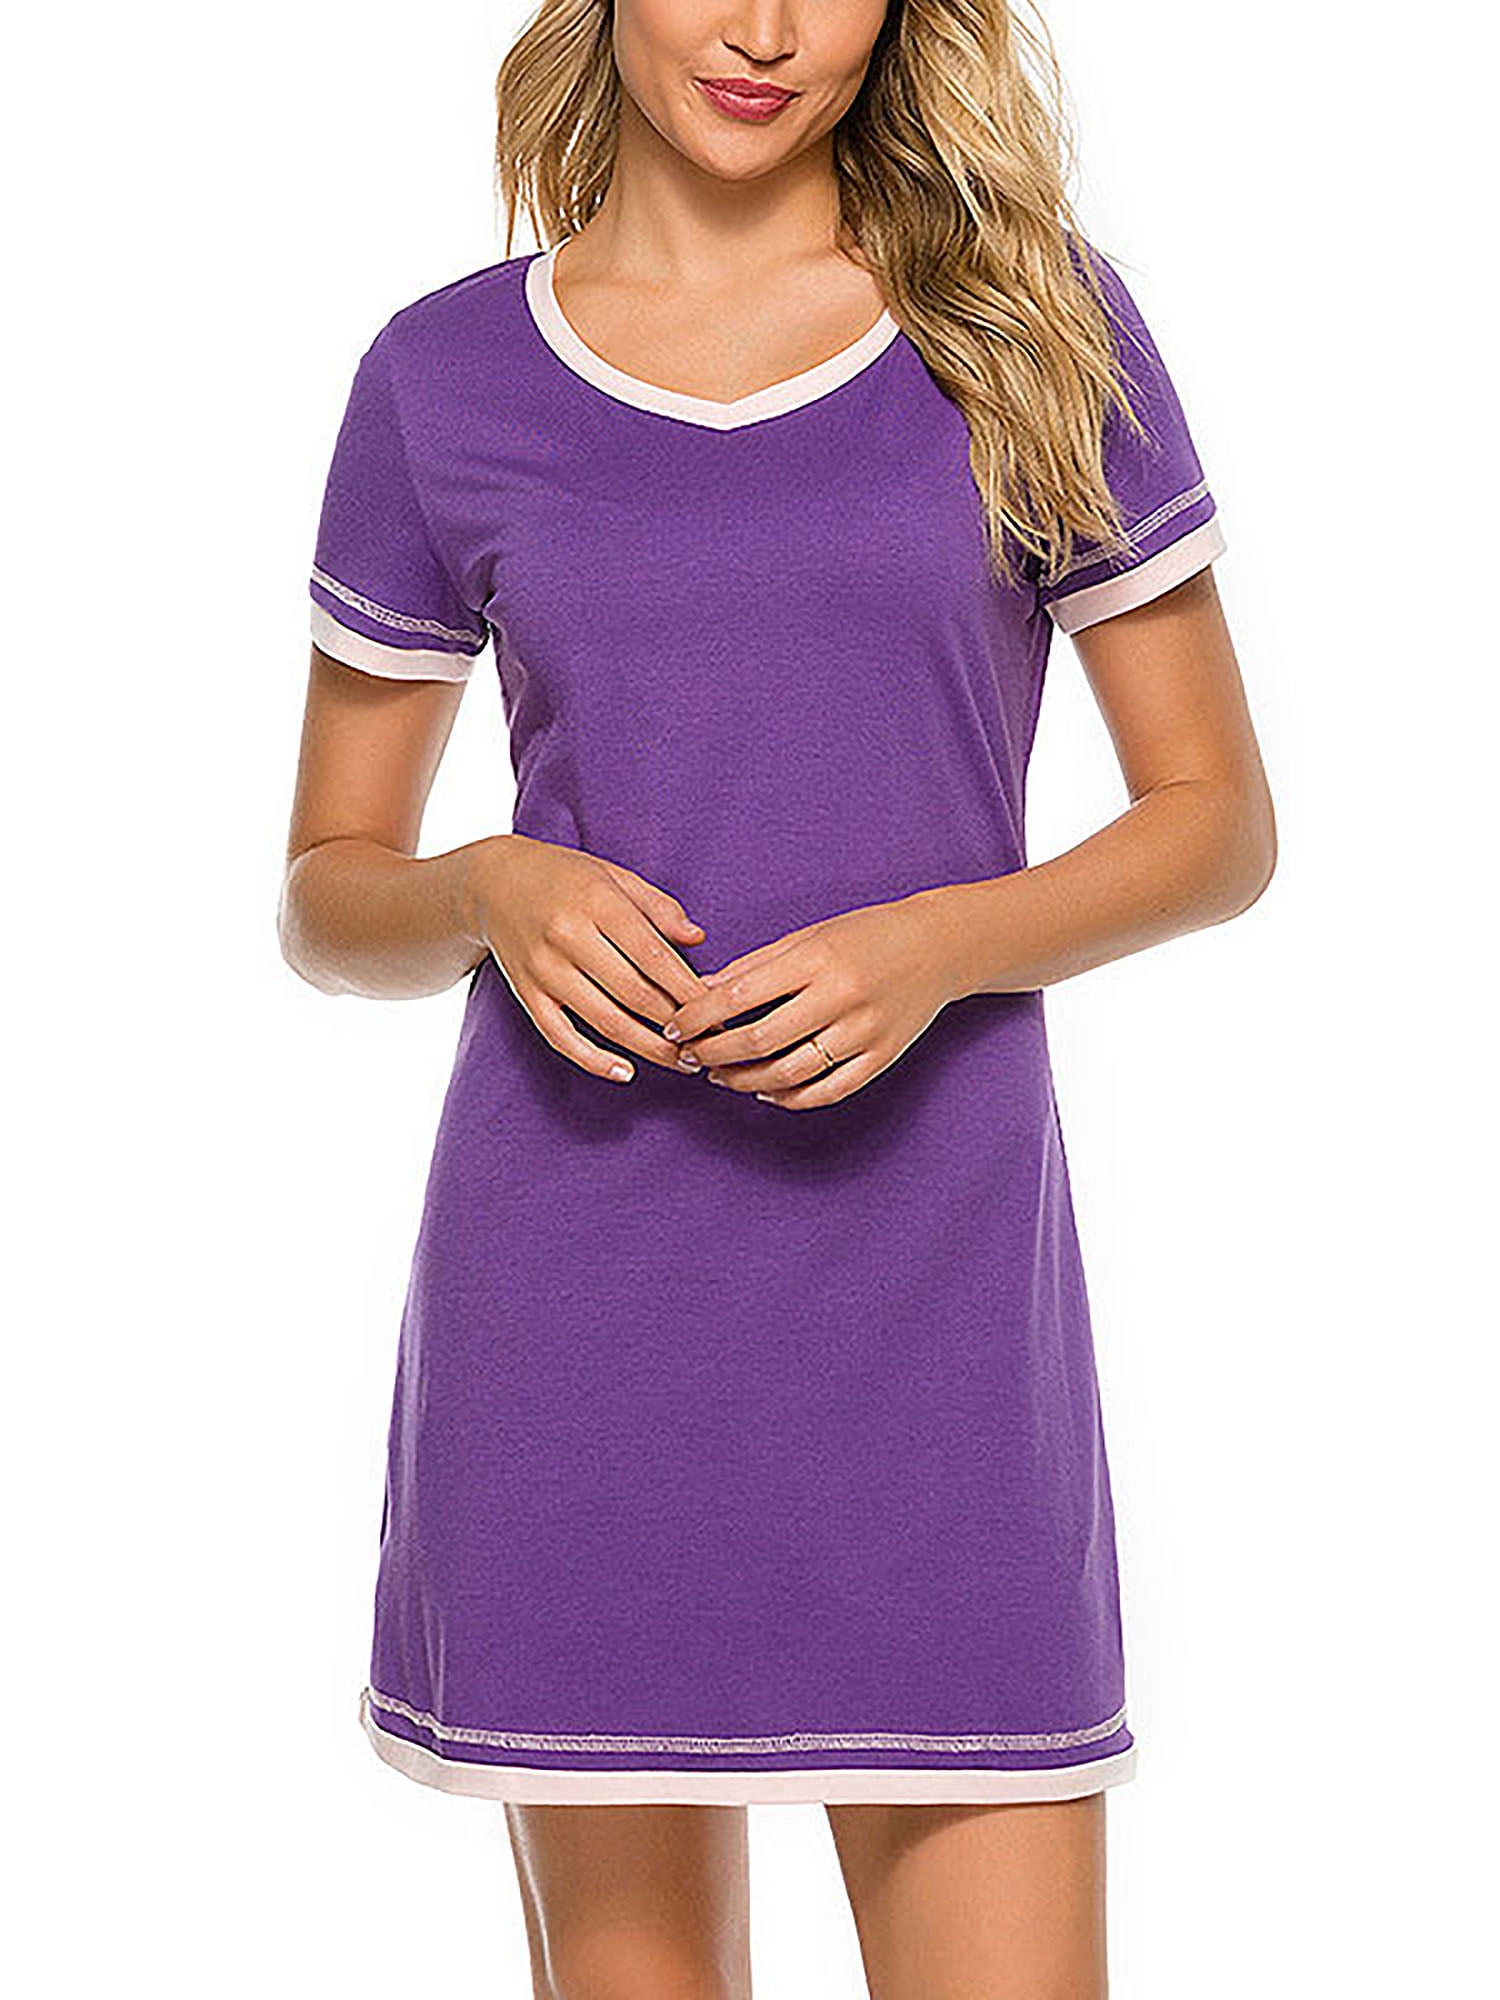 Details about   Women Nightgown Short Sleeve Sleepshirt Graphic Pajama Top Sleep Dress Nightgown